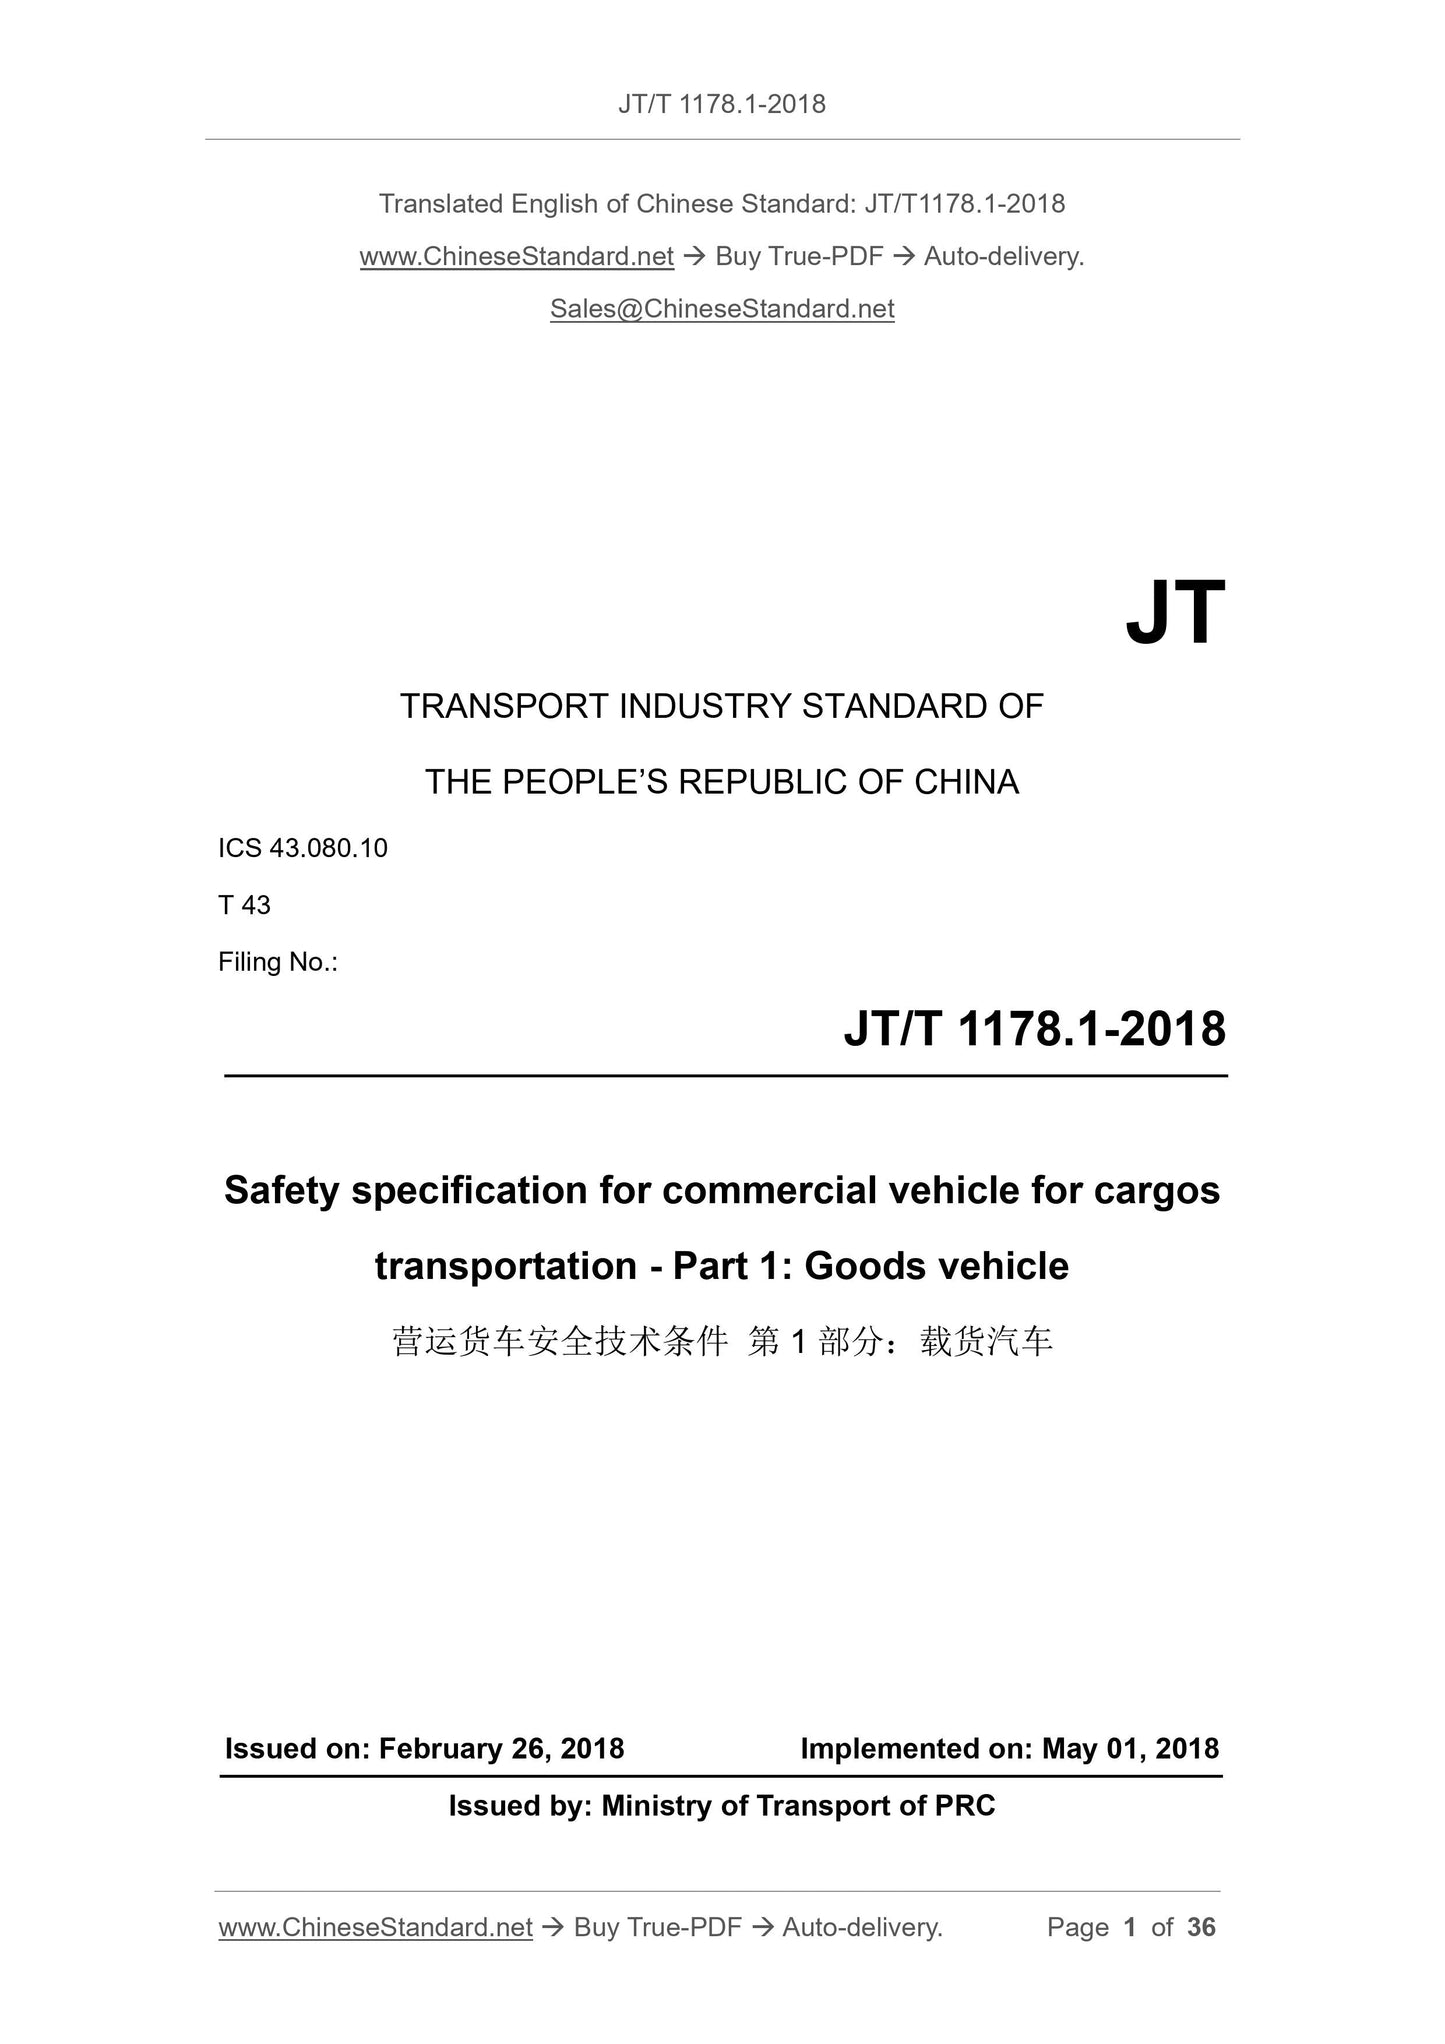 JT/T 1178.1-2018 Page 1